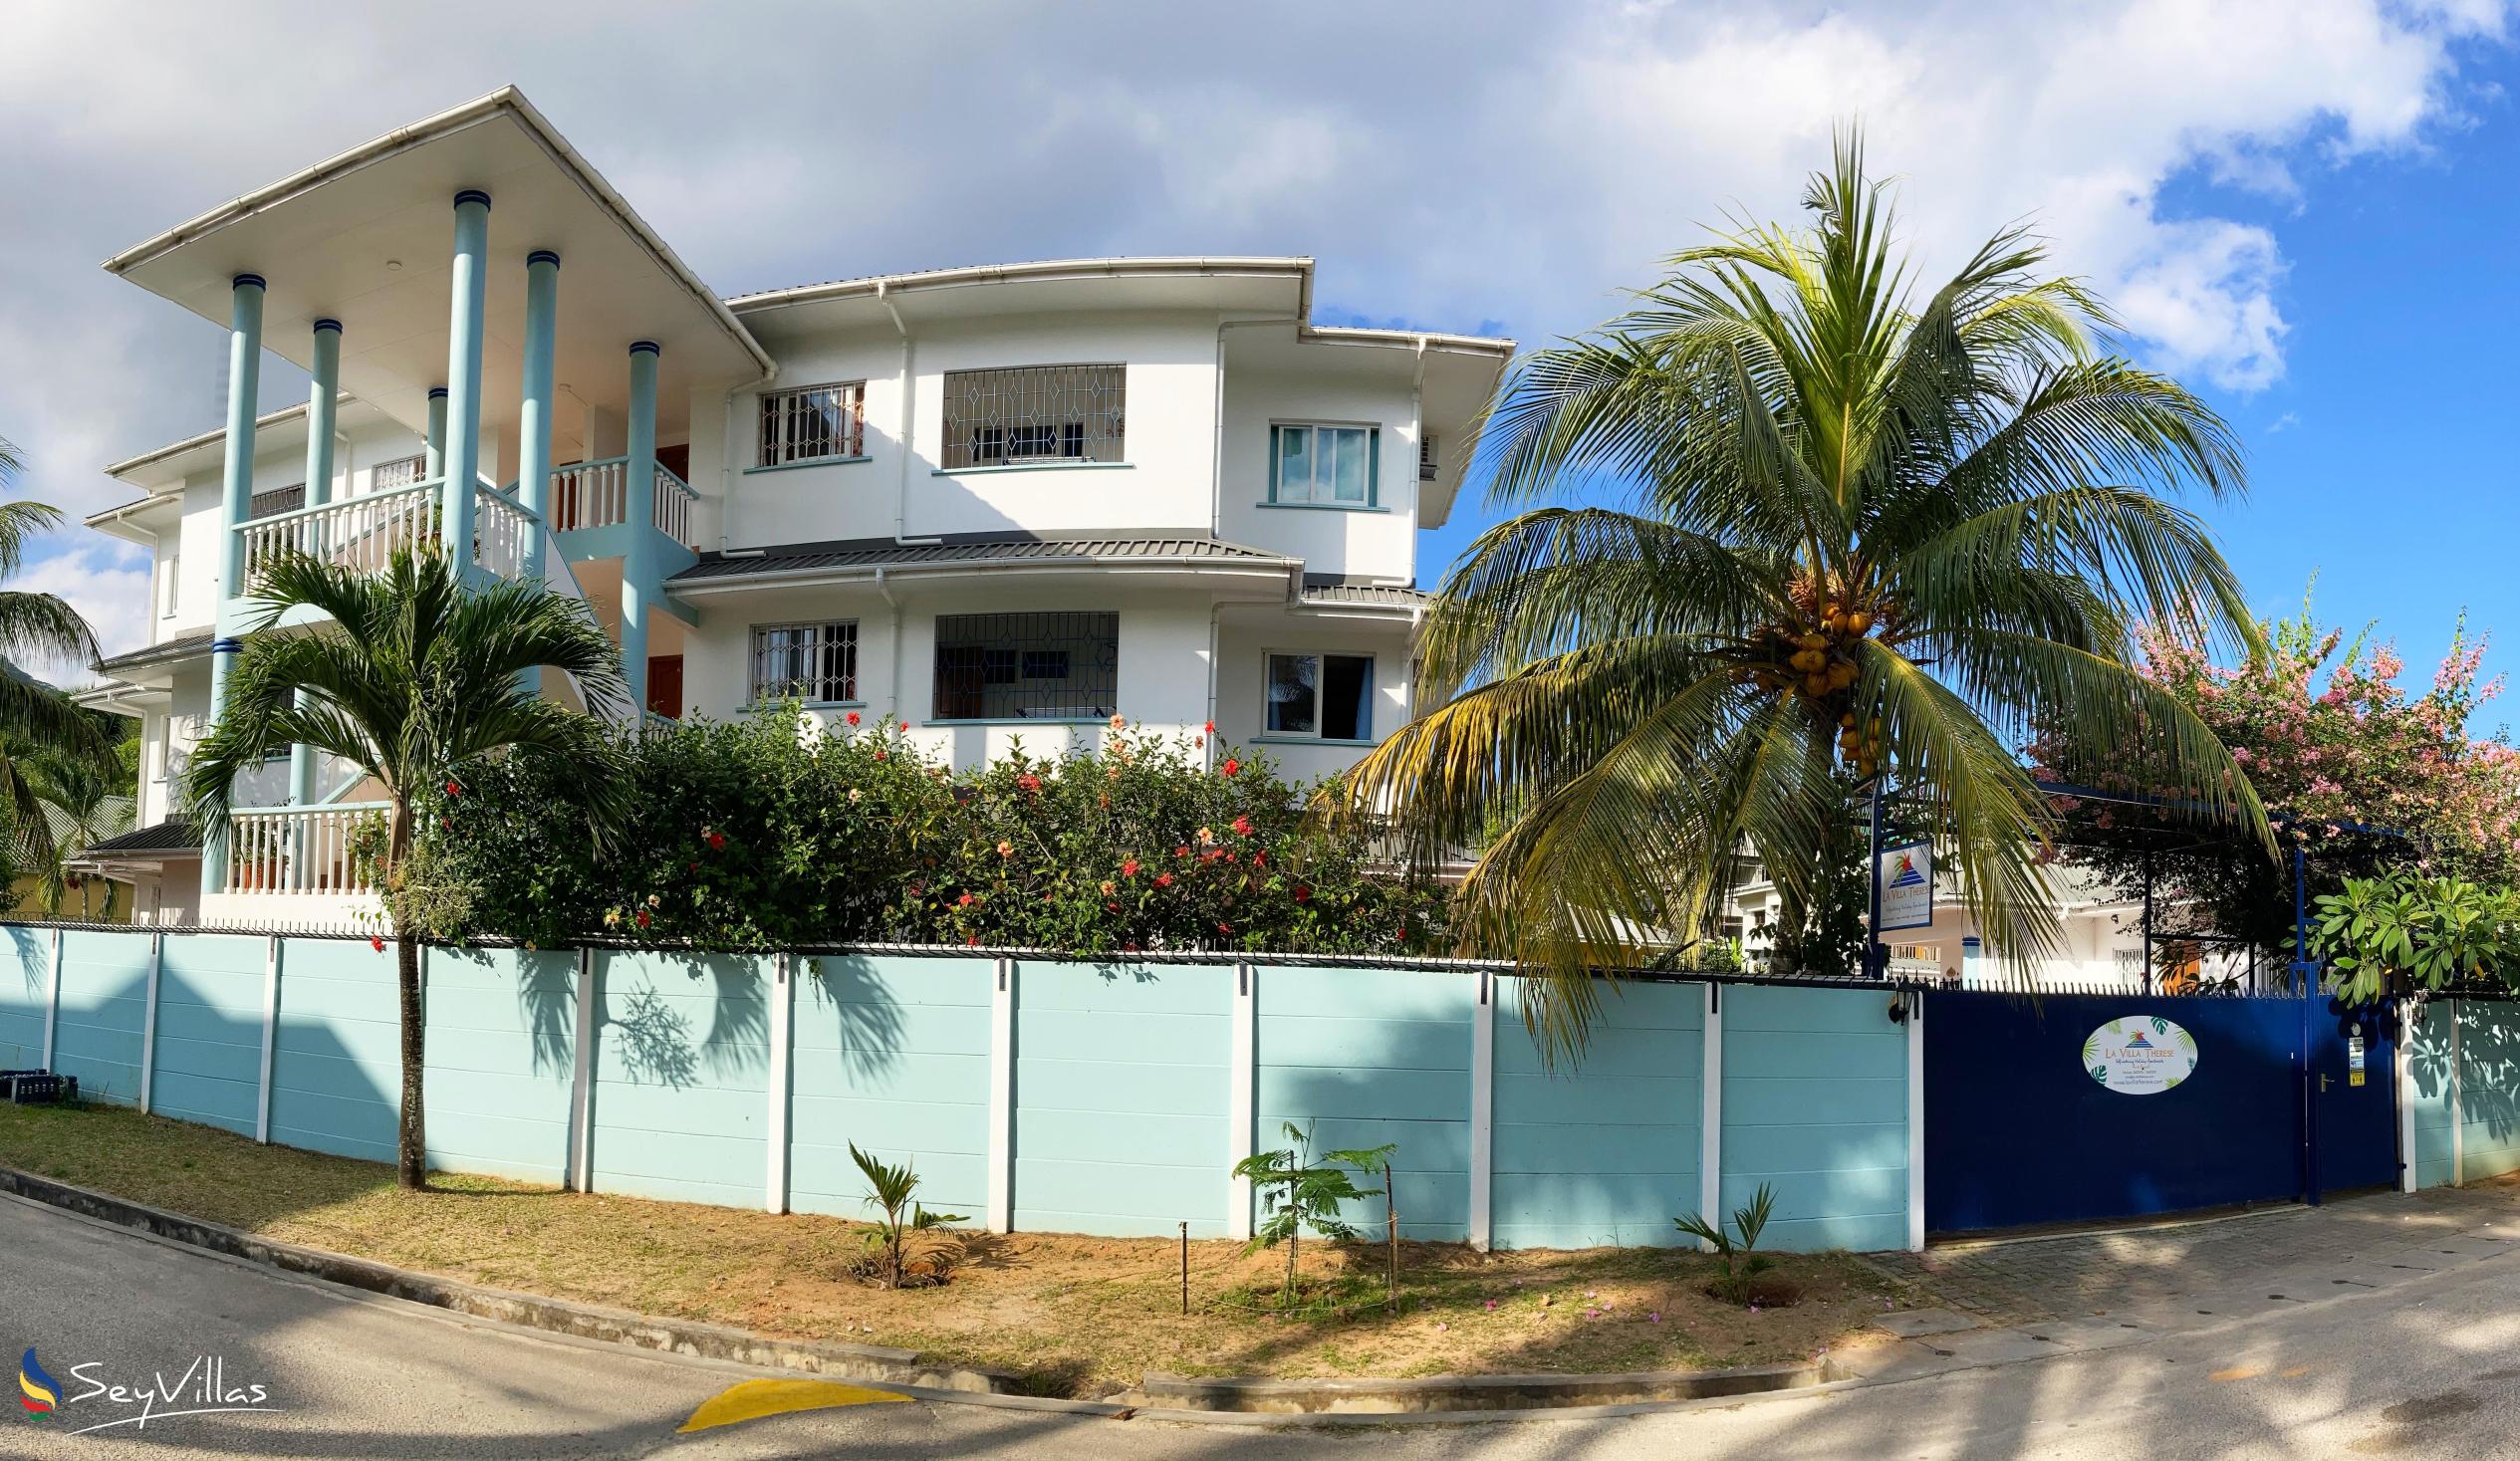 Foto 6: La Villa Therese Holiday Apartments - Aussenbereich - Mahé (Seychellen)